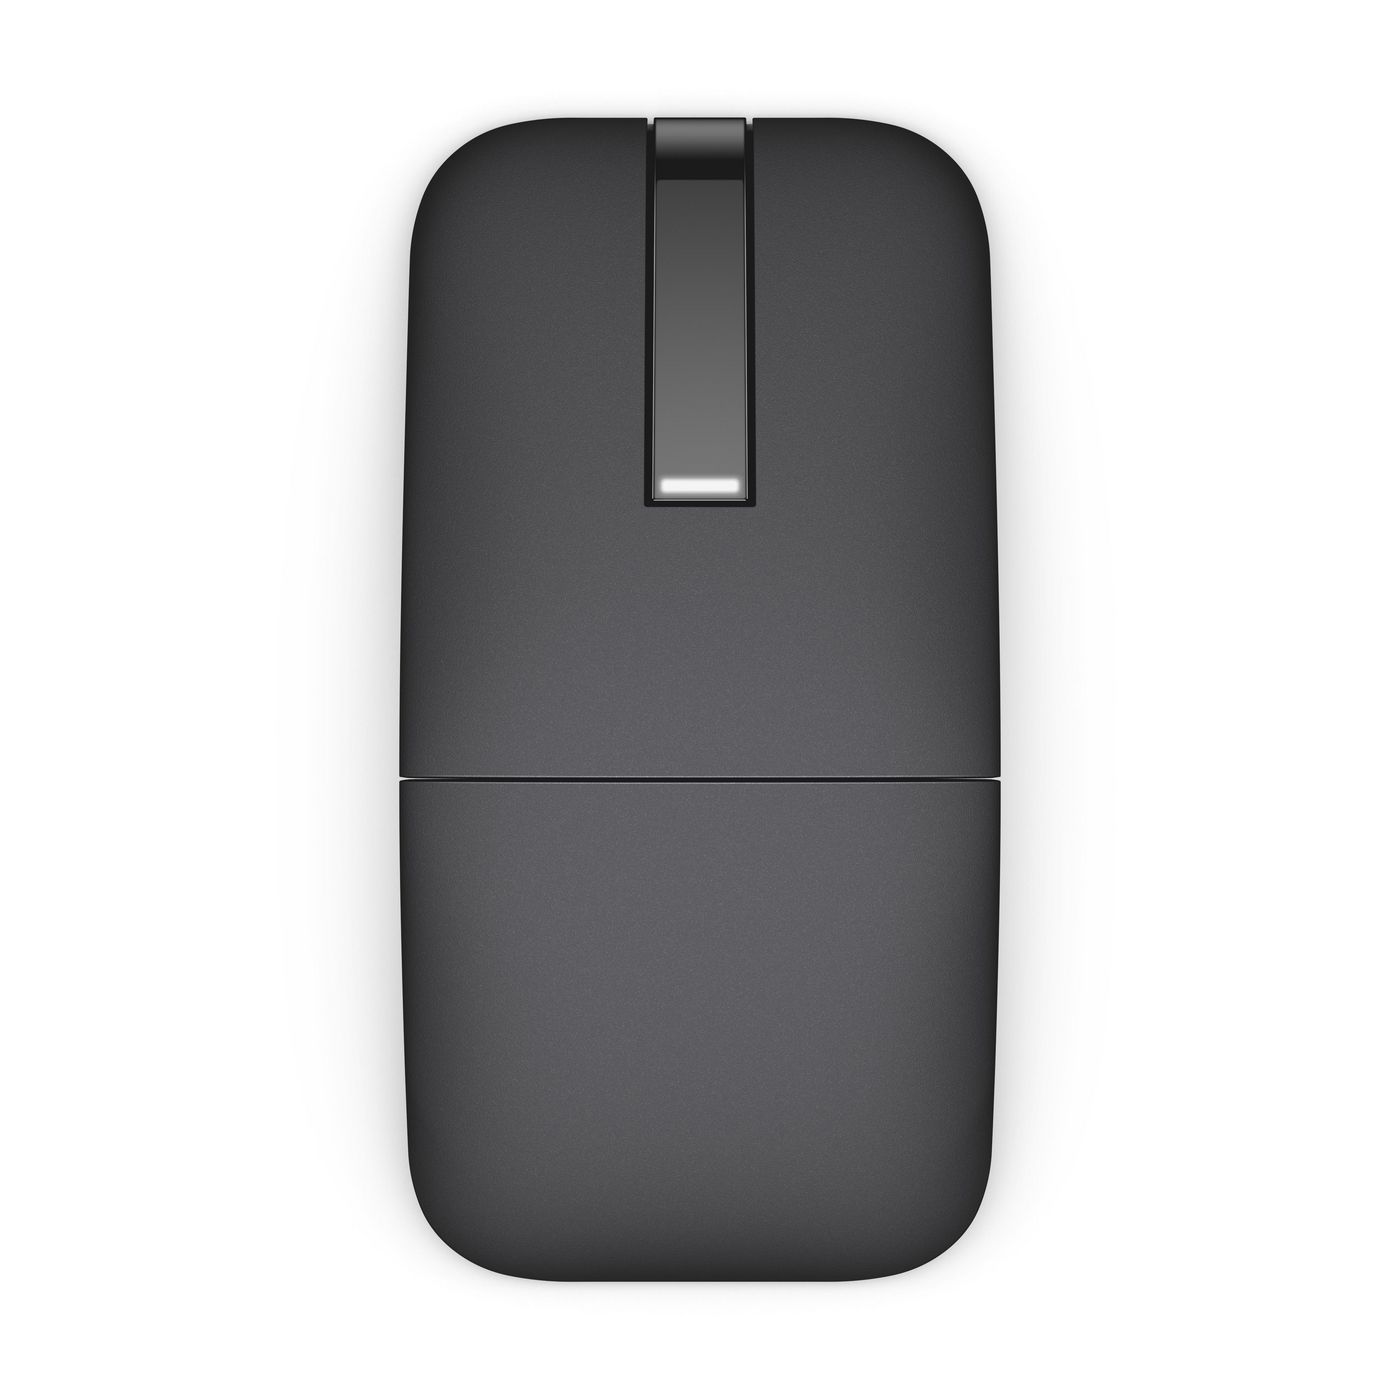 Bluetooth Mouse-wm615